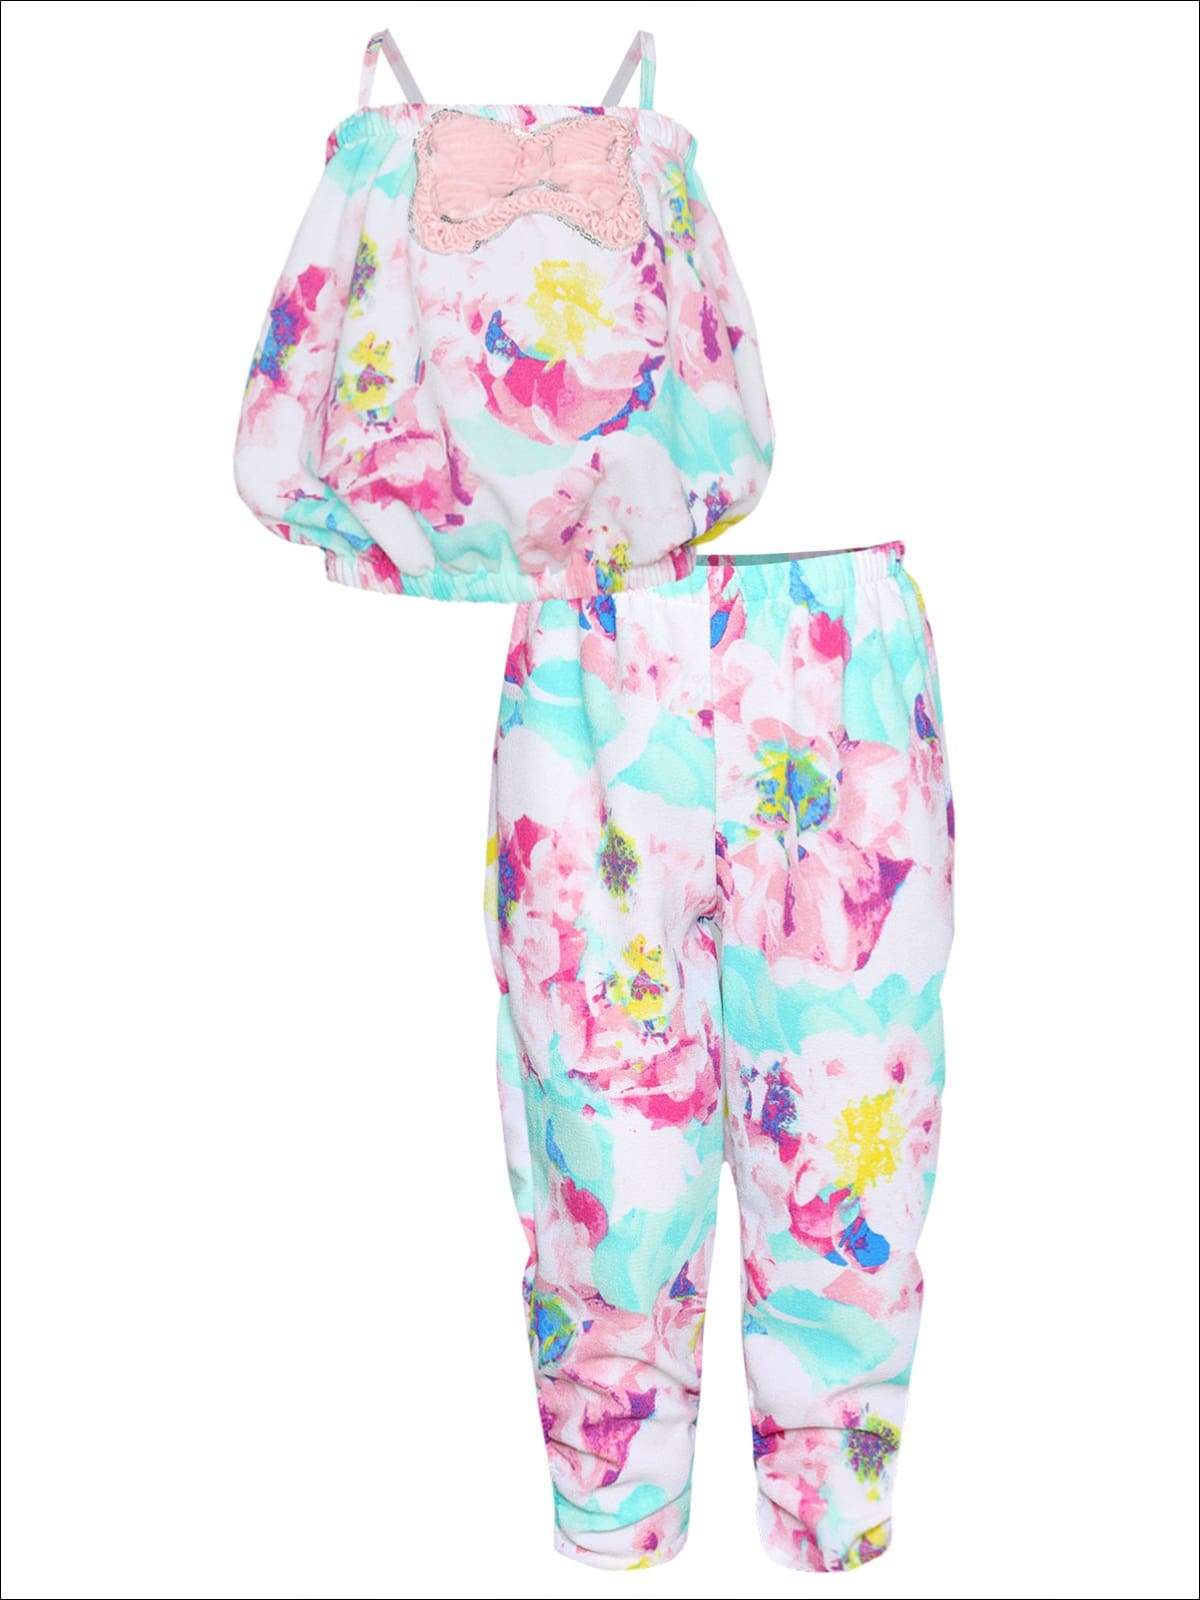 Girls Spaghetti Strap Bubble Top & Capri Pants Set - Pink / 2T/3T - Girls Spring Casual Set